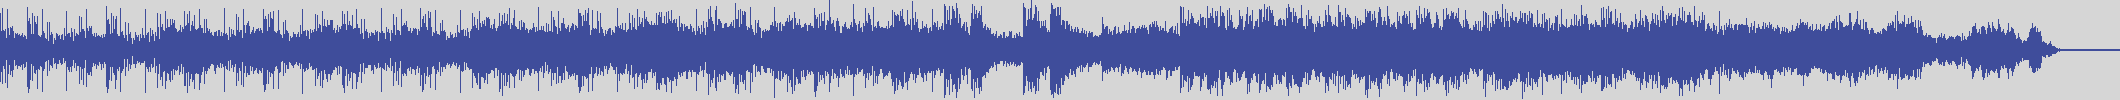 noclouds_chillout [NOC004] Ale B - Reserved [Original Mix] audio wave form